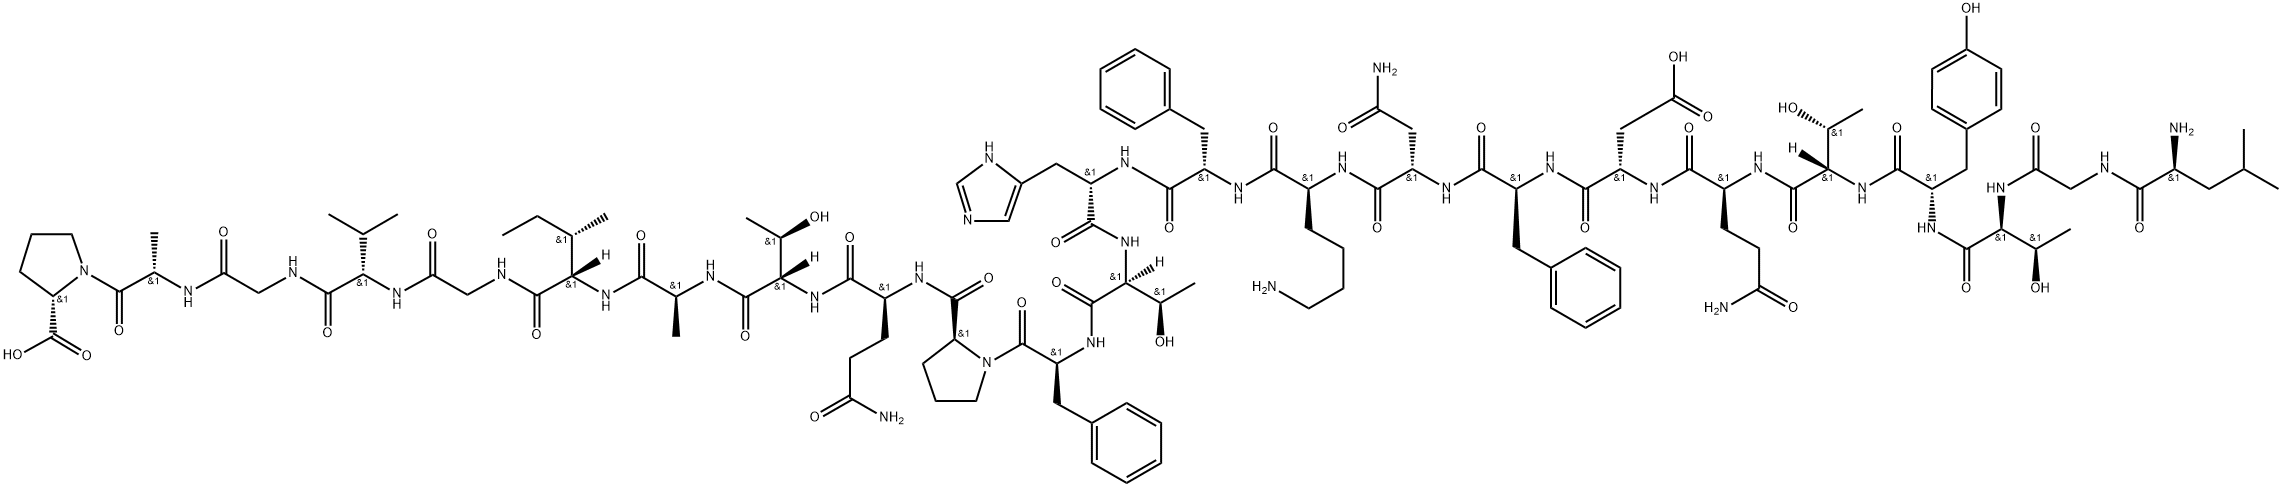 Calcitonin (9-32) (free acid) (human) Structure